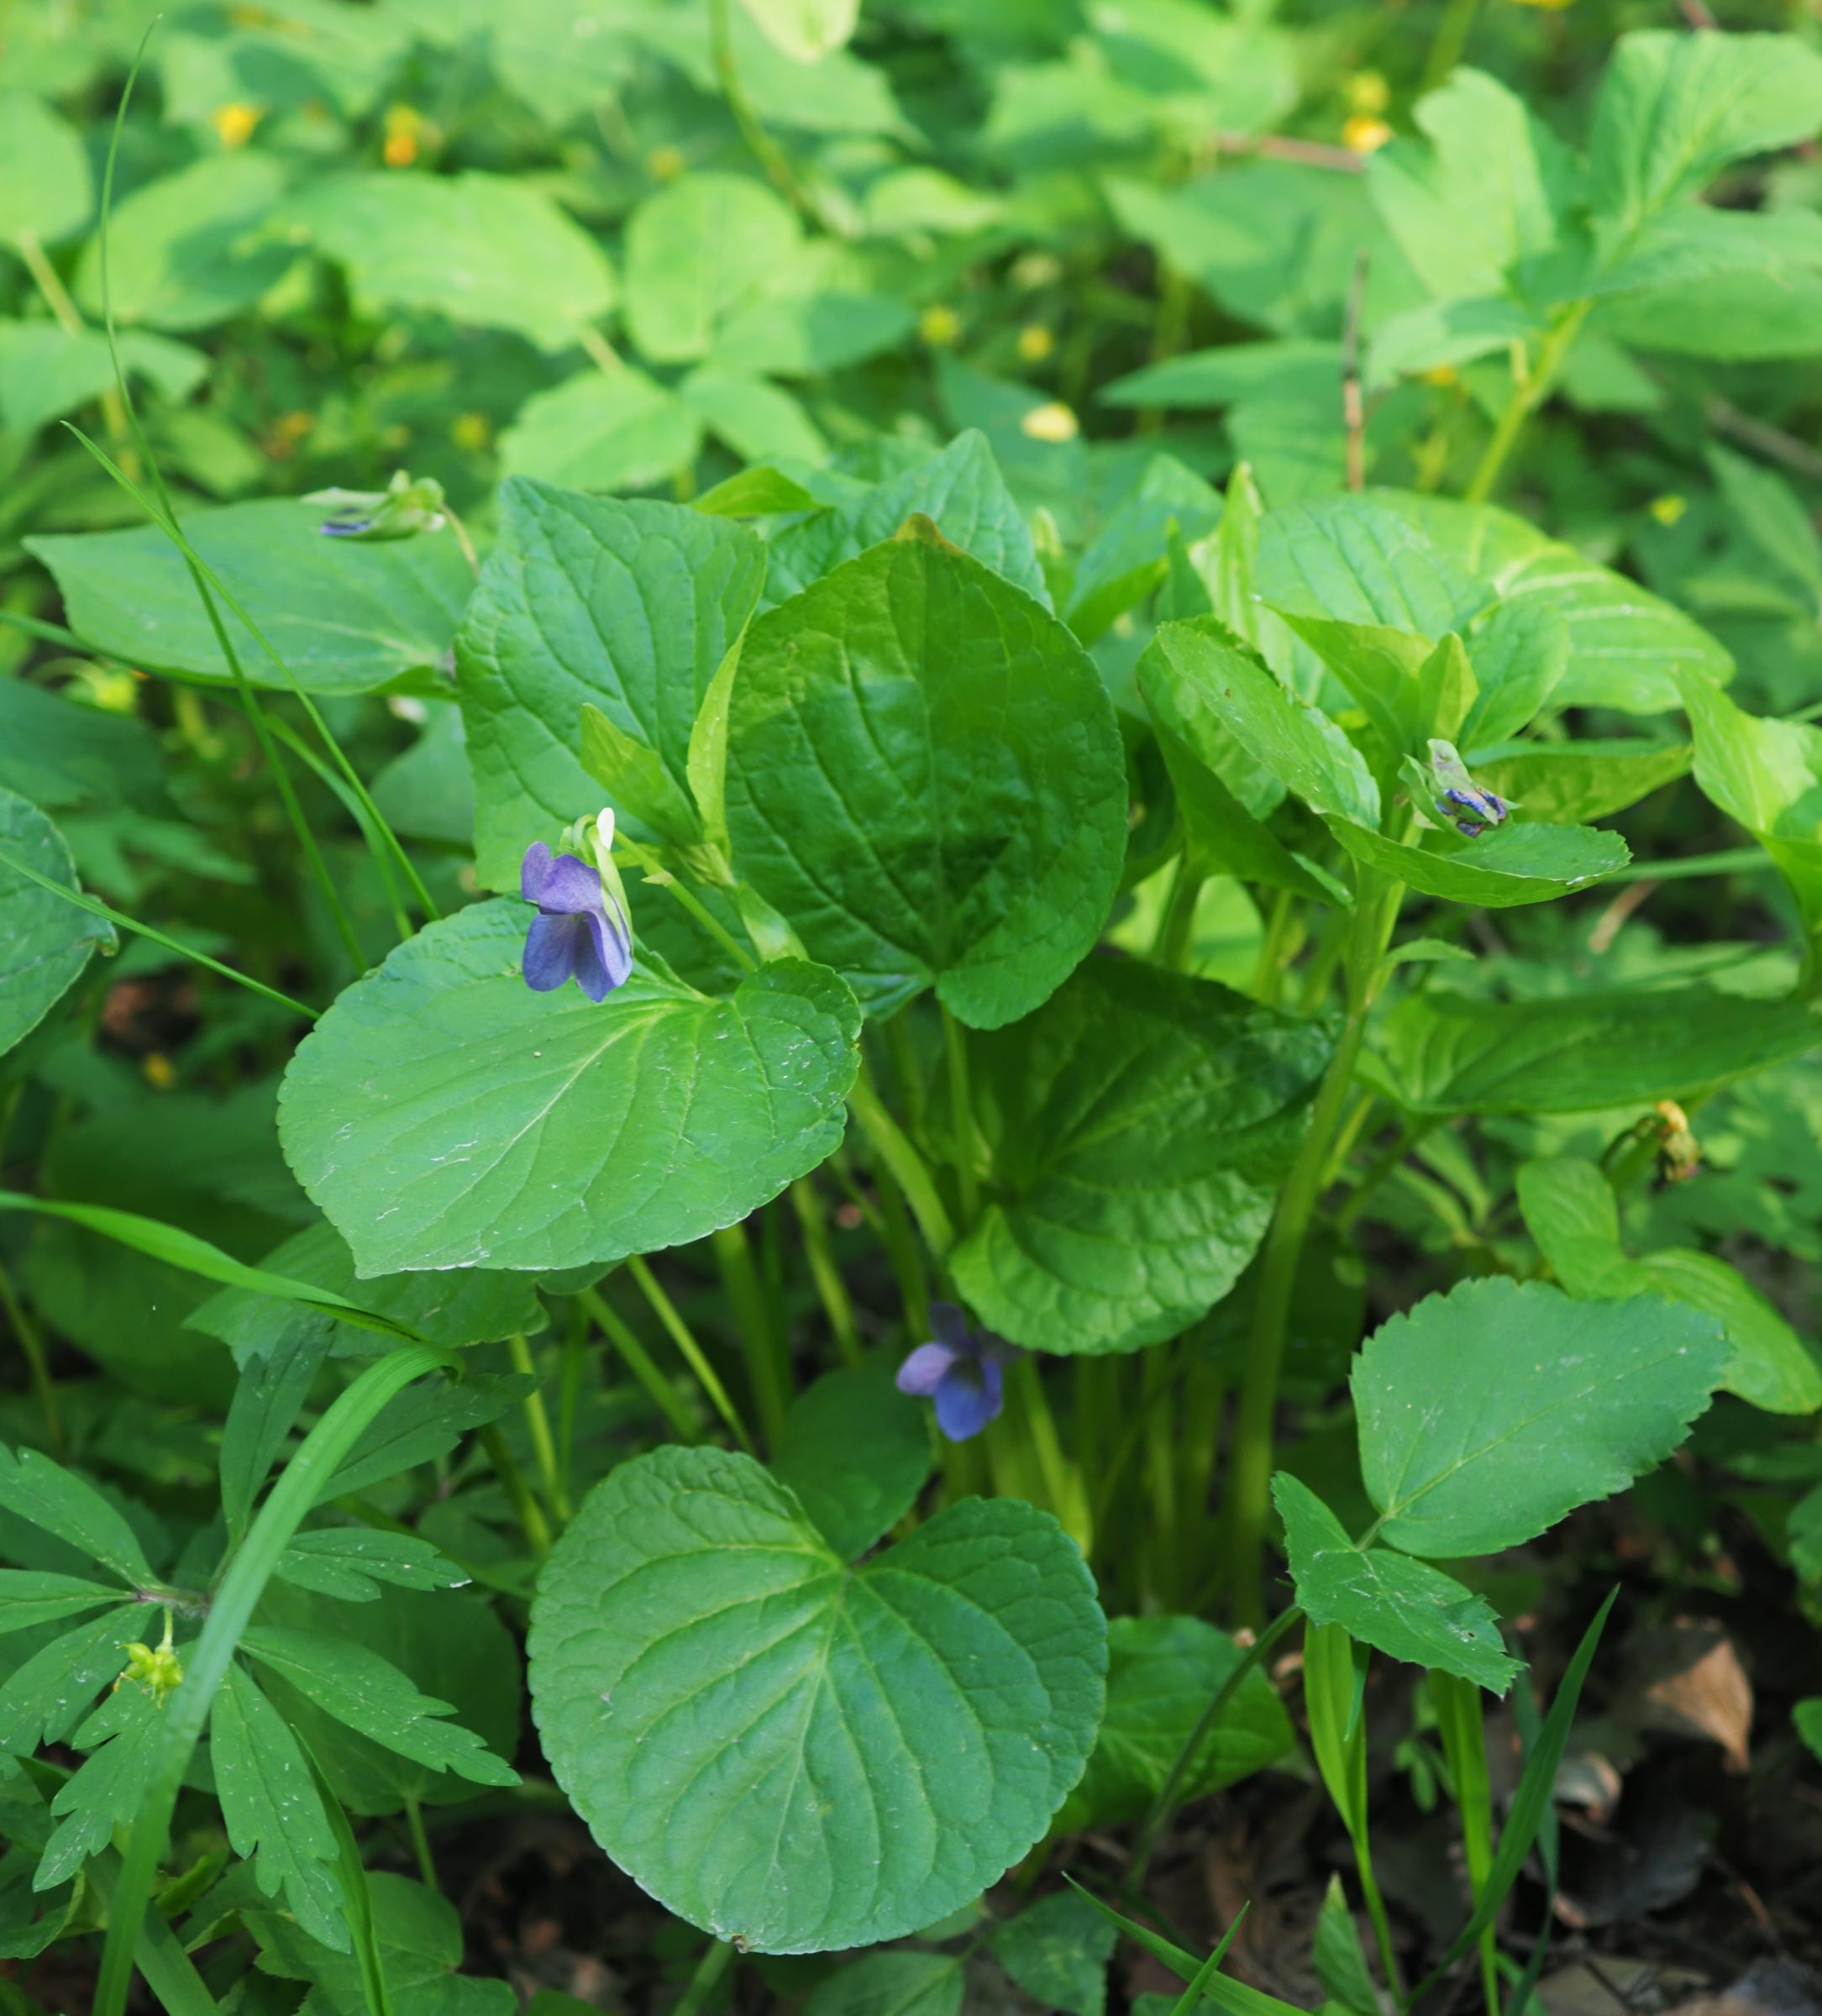 20210430 Eckartsau - Viola mirabilis stengelständige Blüte.jpg